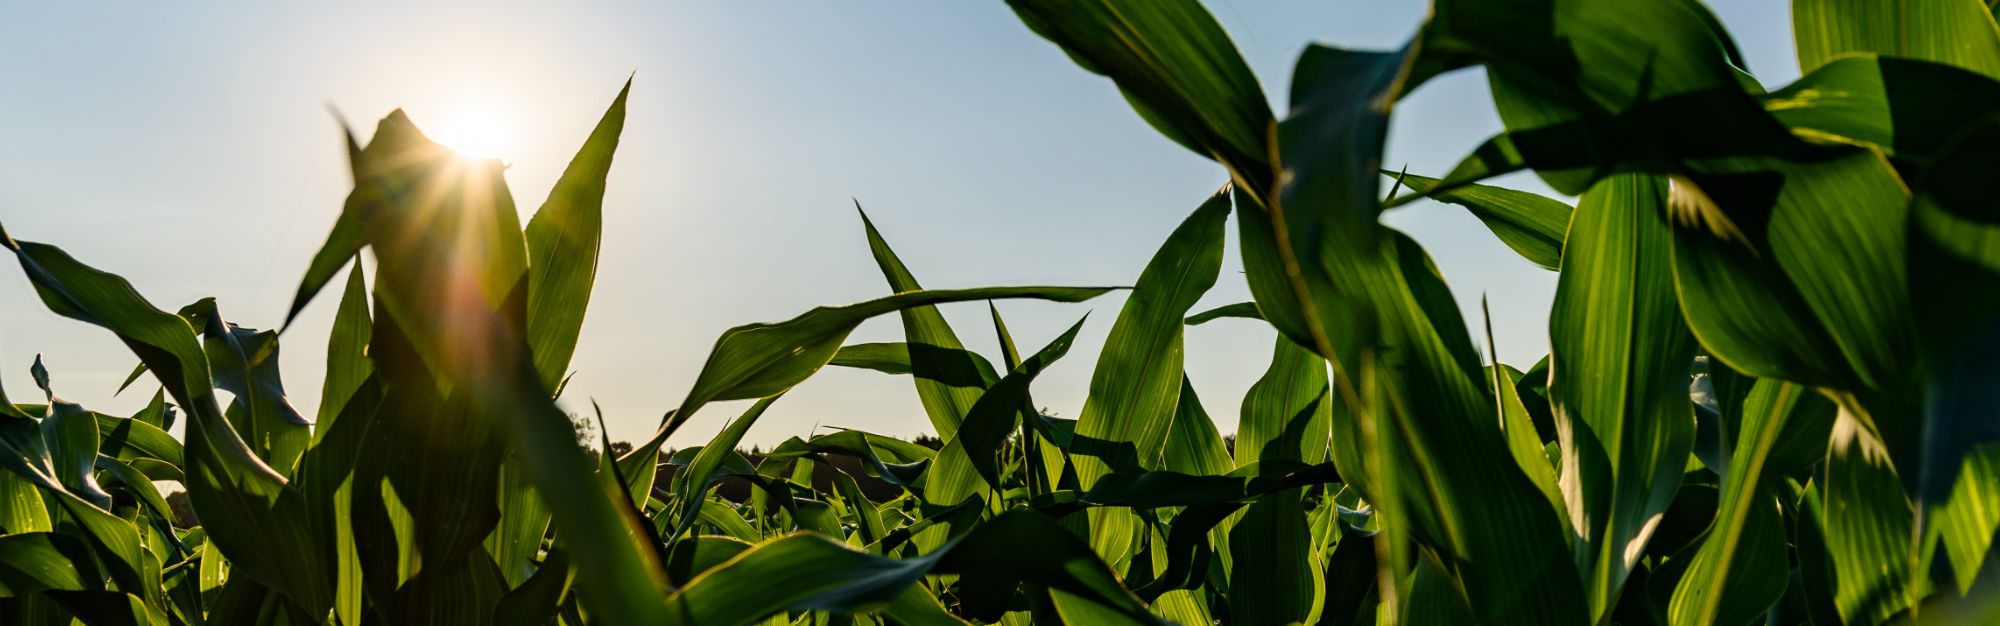 Sunlight hitting field of corn